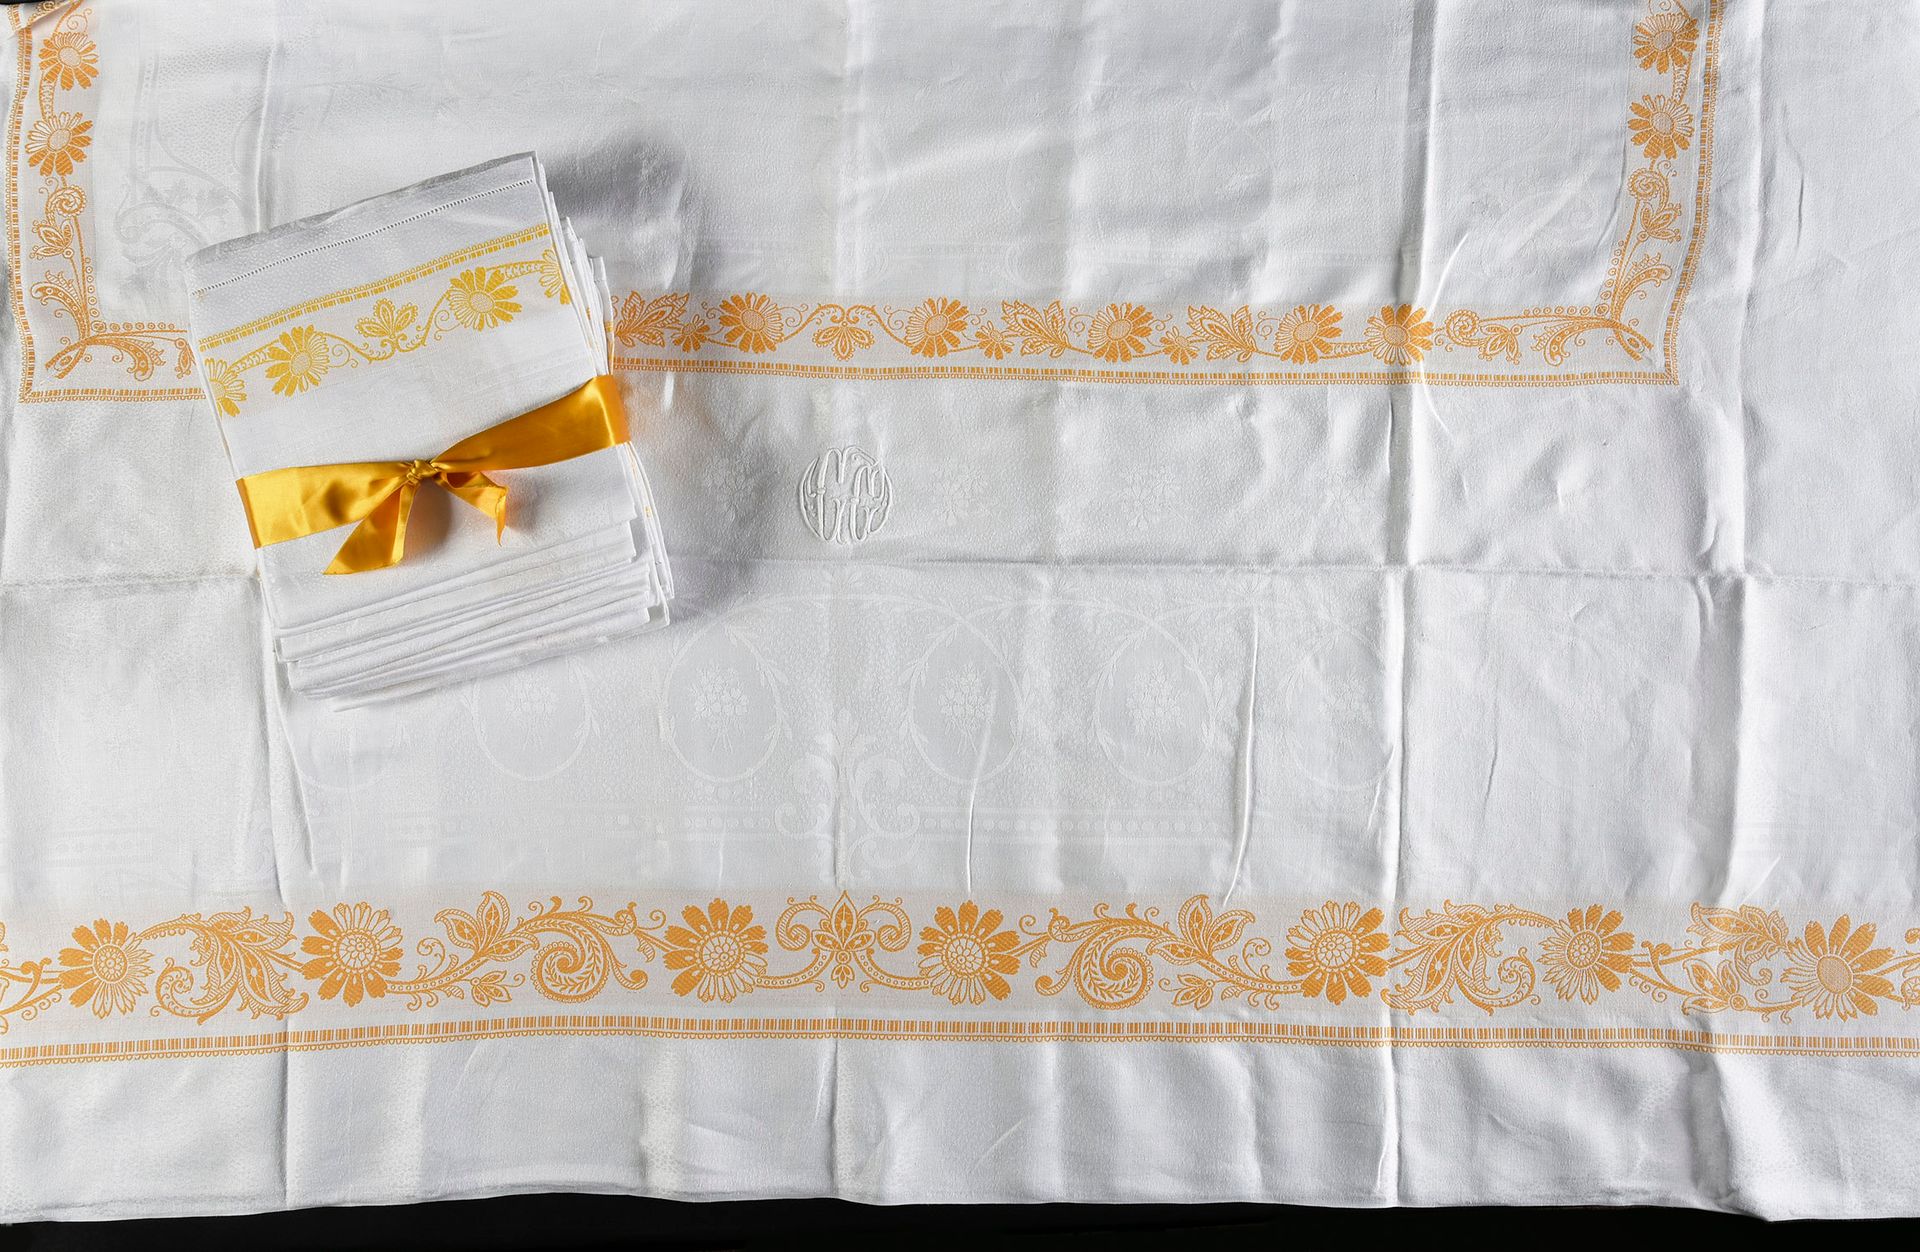 Null 桌布和18张餐巾，19世纪末。
桌布和18张餐巾，奶油色的棉质大马士革，上面有花卉装饰和对比鲜明的金黄色带状雏菊，数字GG用白色绣成。桌布尺寸：170&hellip;